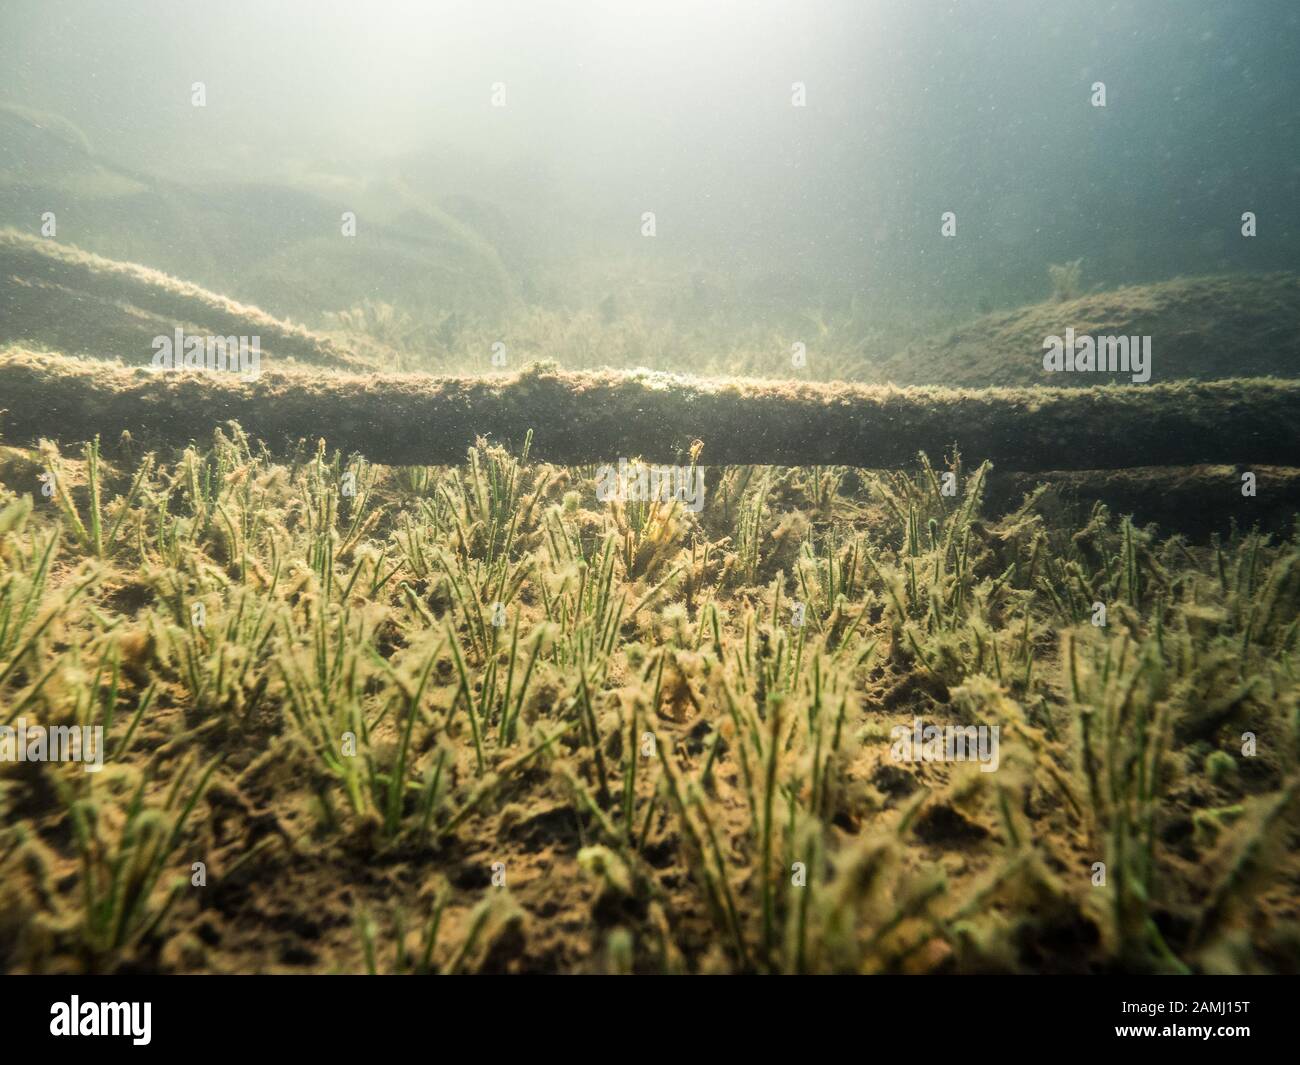 Underwater view of sunken tree on lake quillwort plants Stock Photo